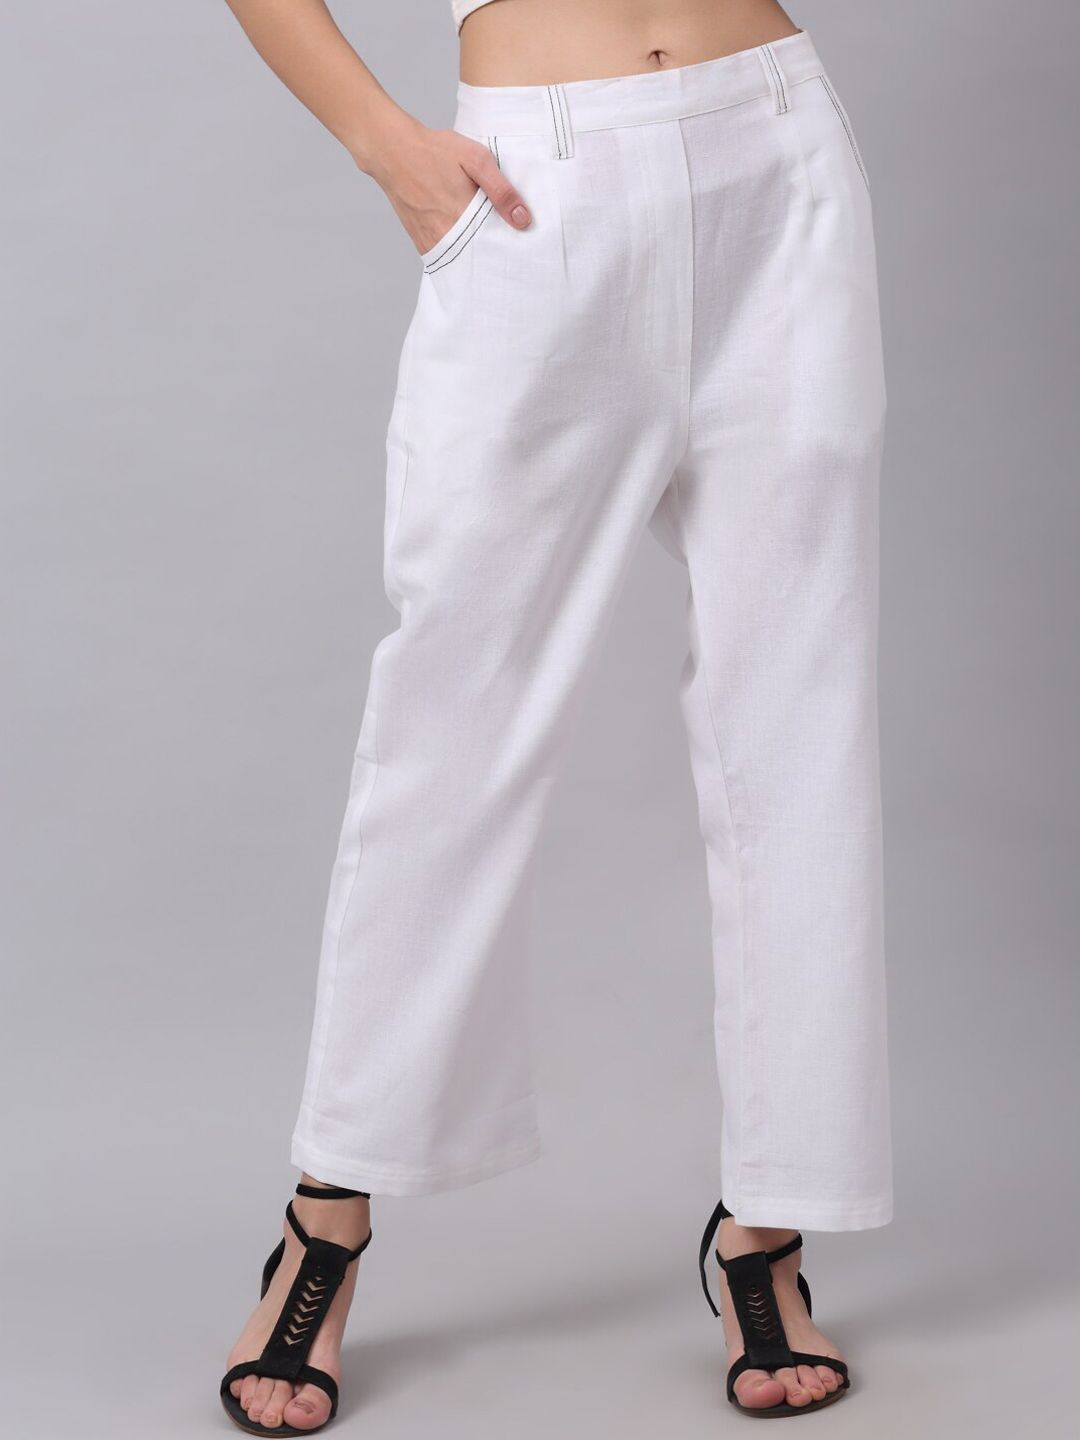 NEUDIS Women White Trousers Price in India